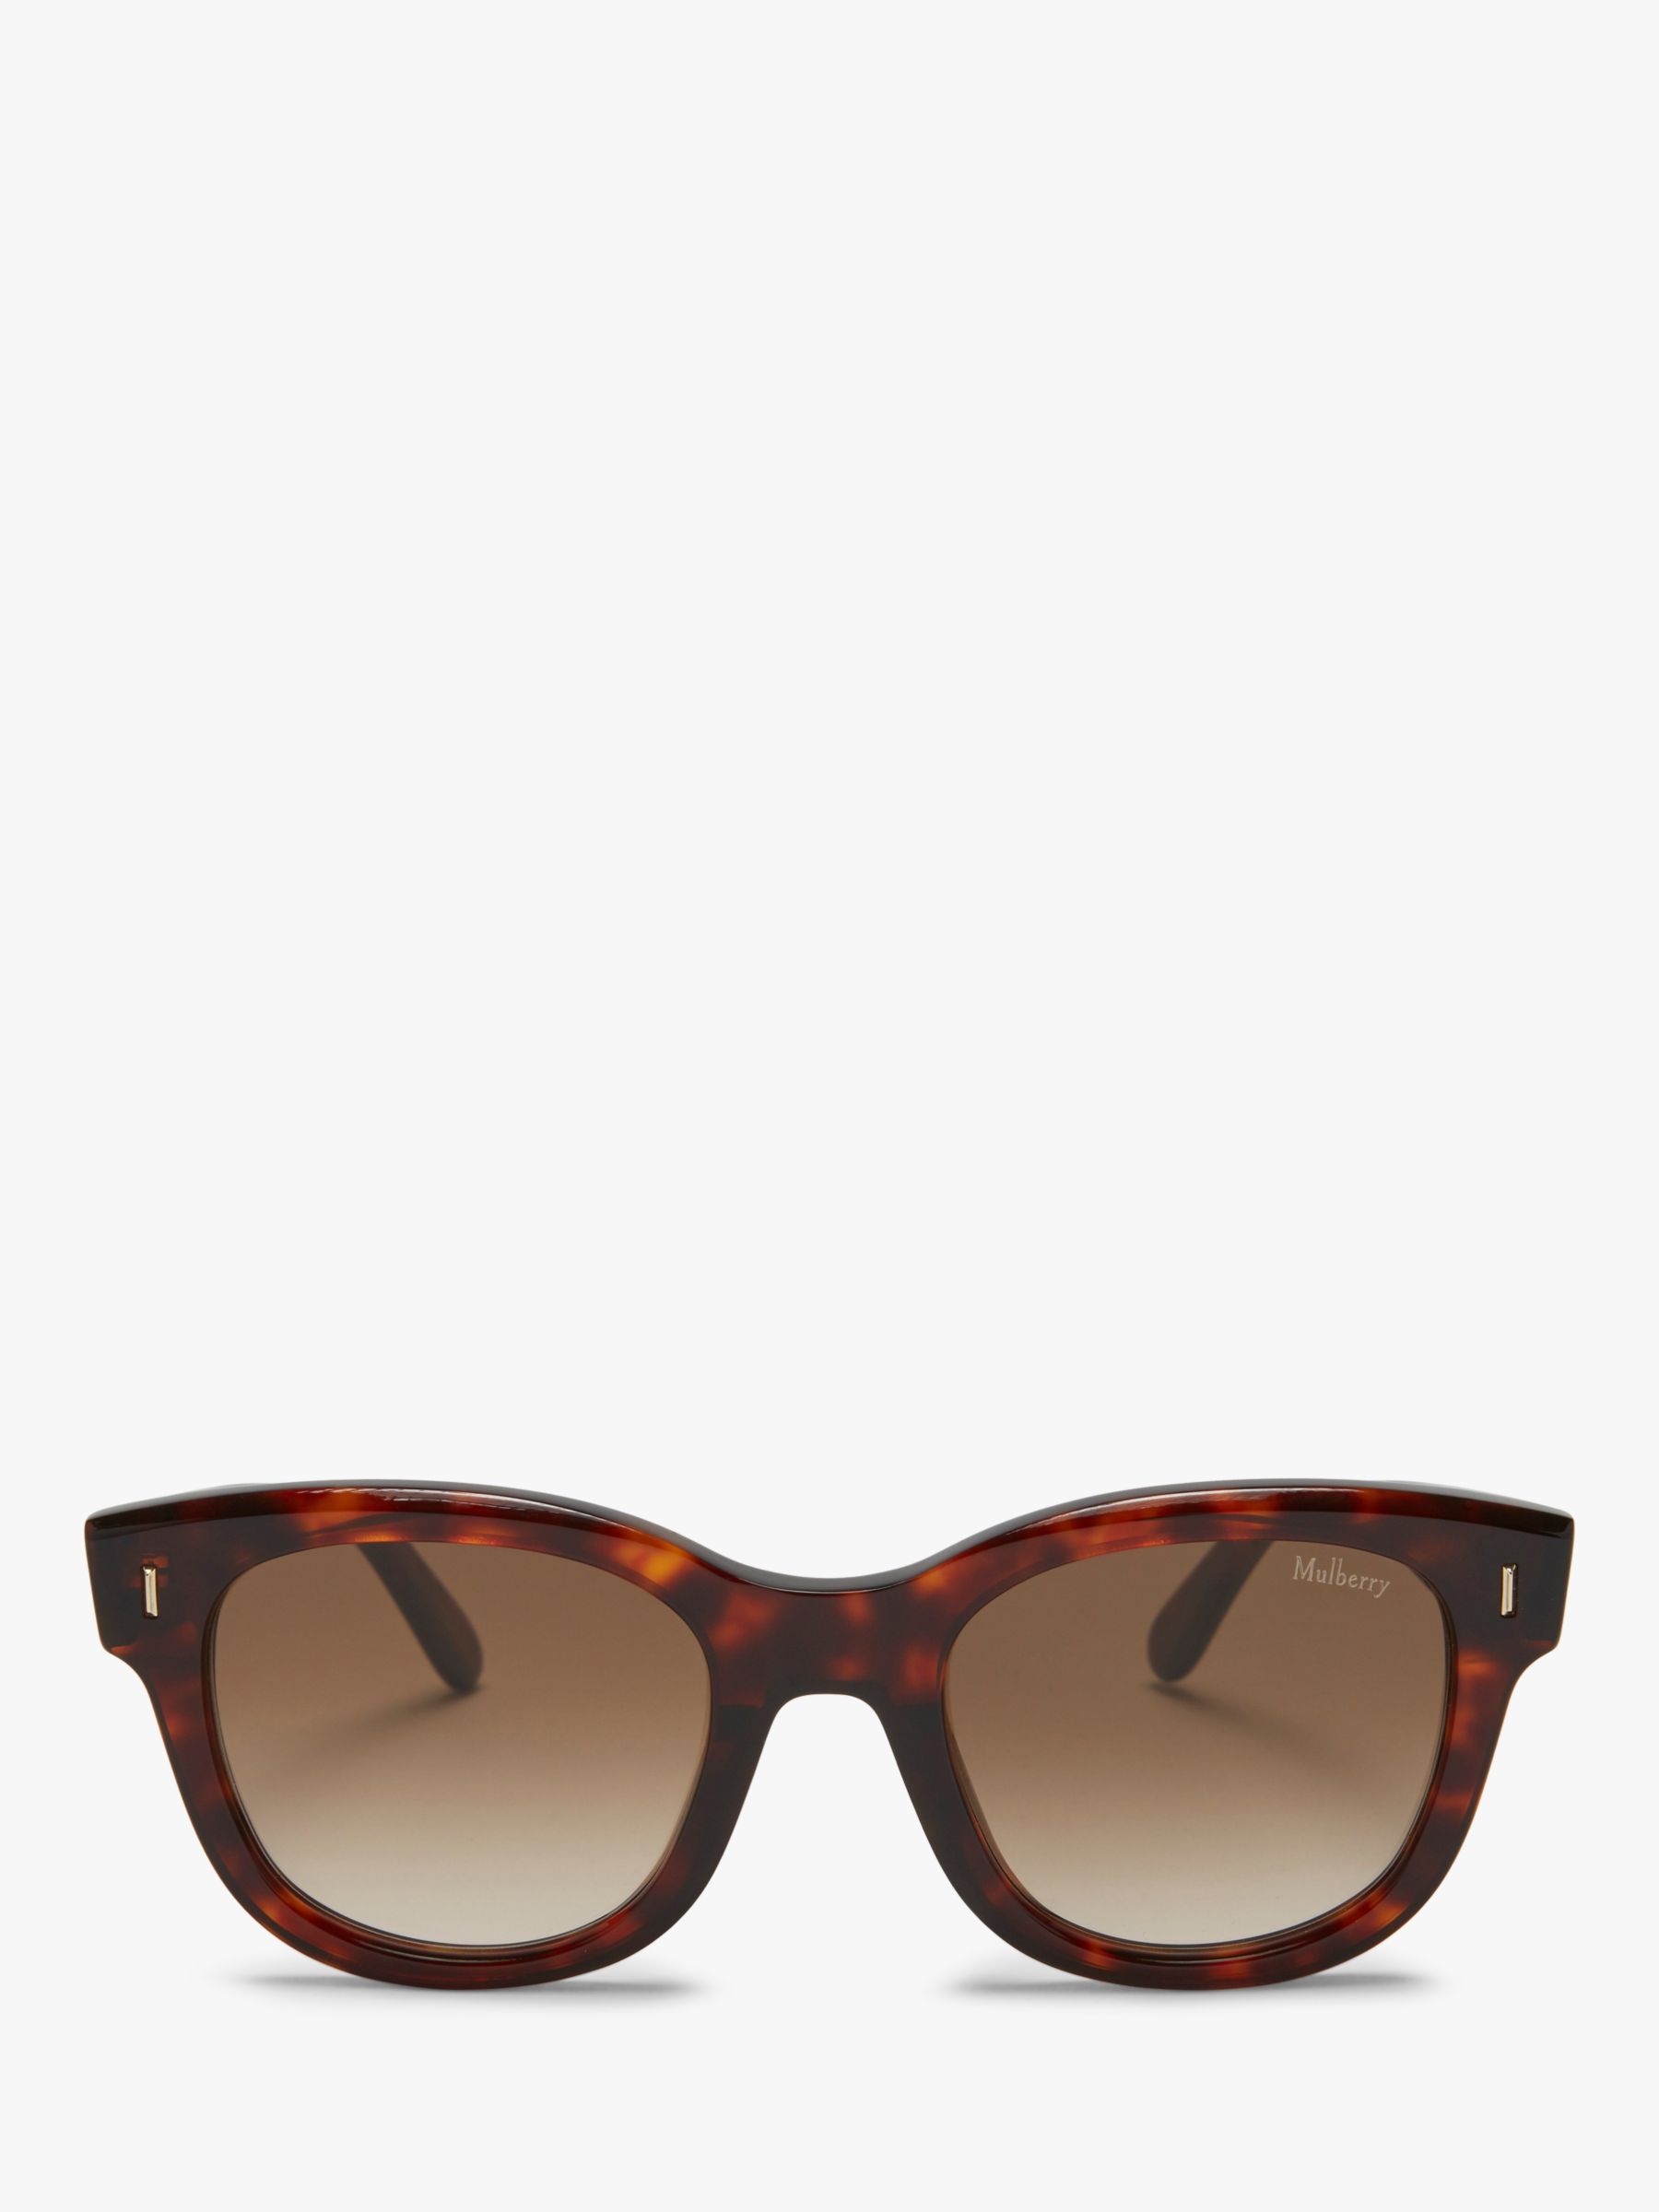 Mulberry Women's Jane D-Frame Sunglasses, Red Havana/Brown Gradient